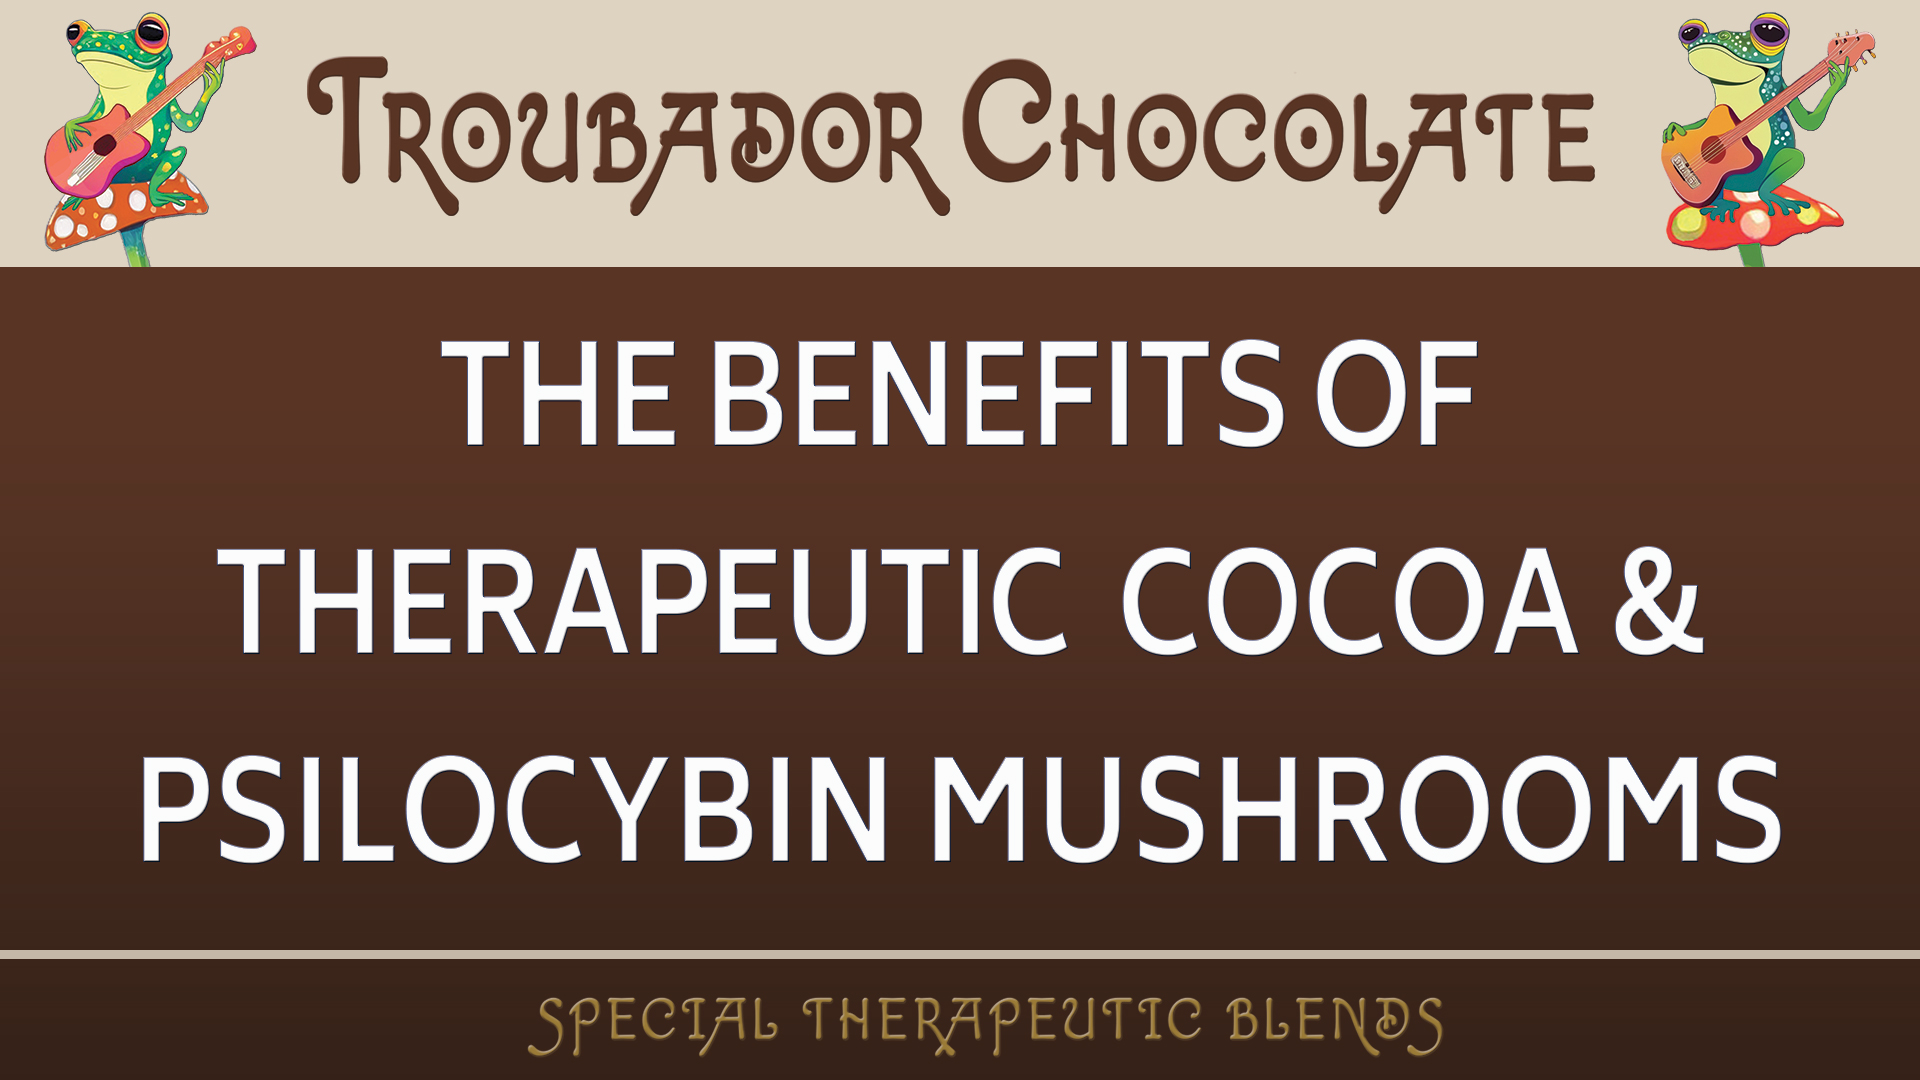 Psilocybin & Cocoa | Troubador Chocolate